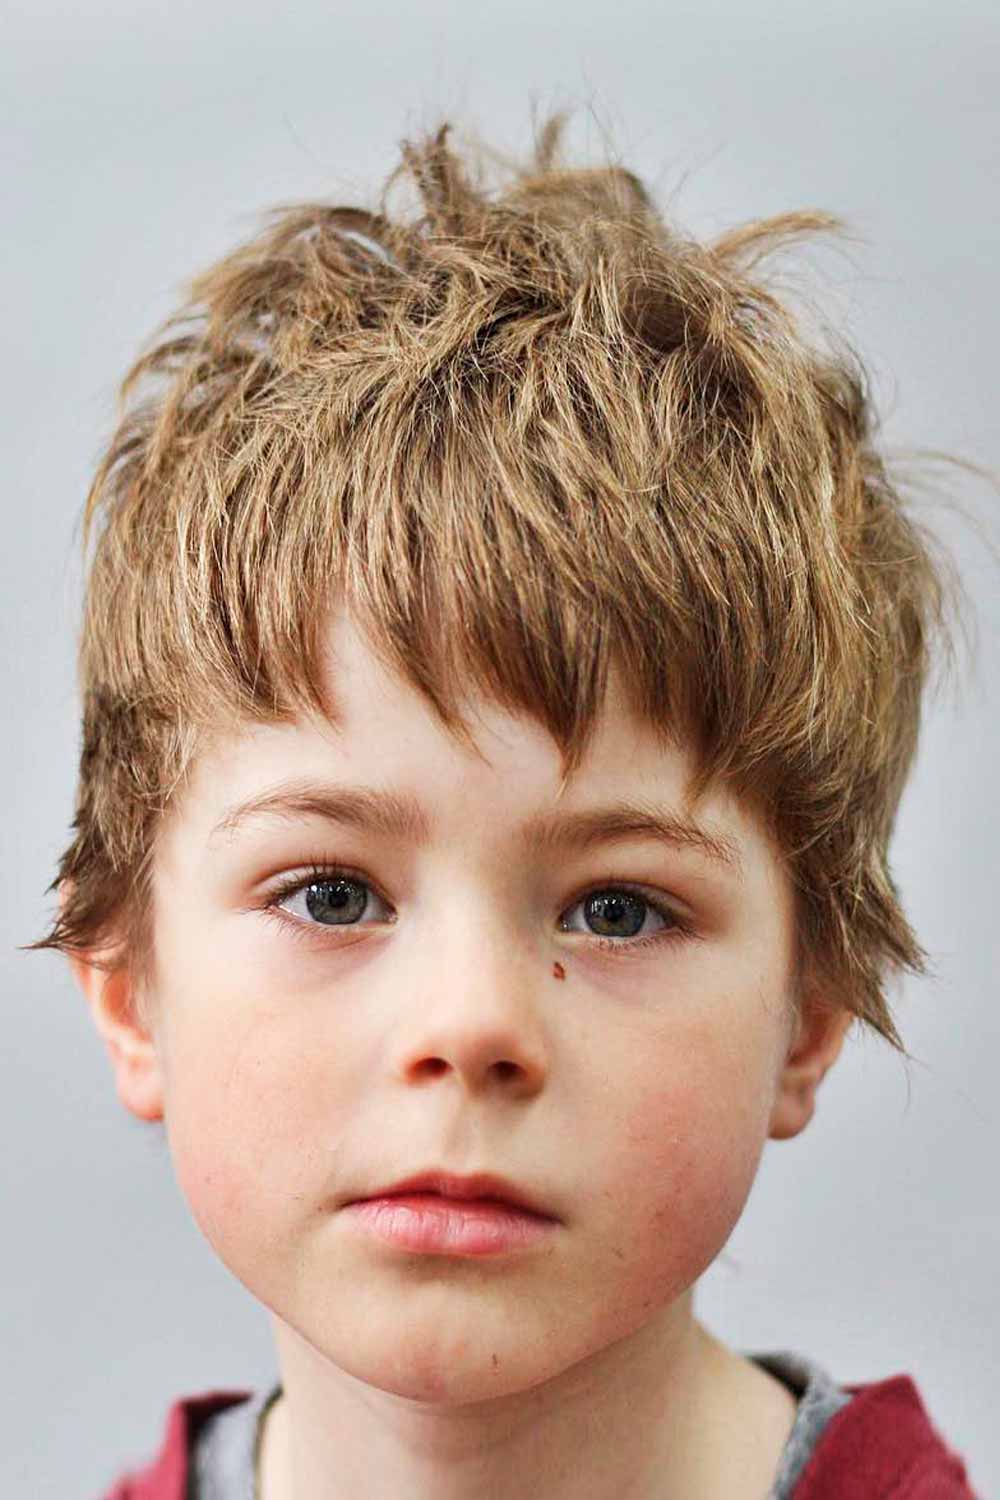 45 Little Boy Haircuts Your Kid Will Love - Mens Haircuts